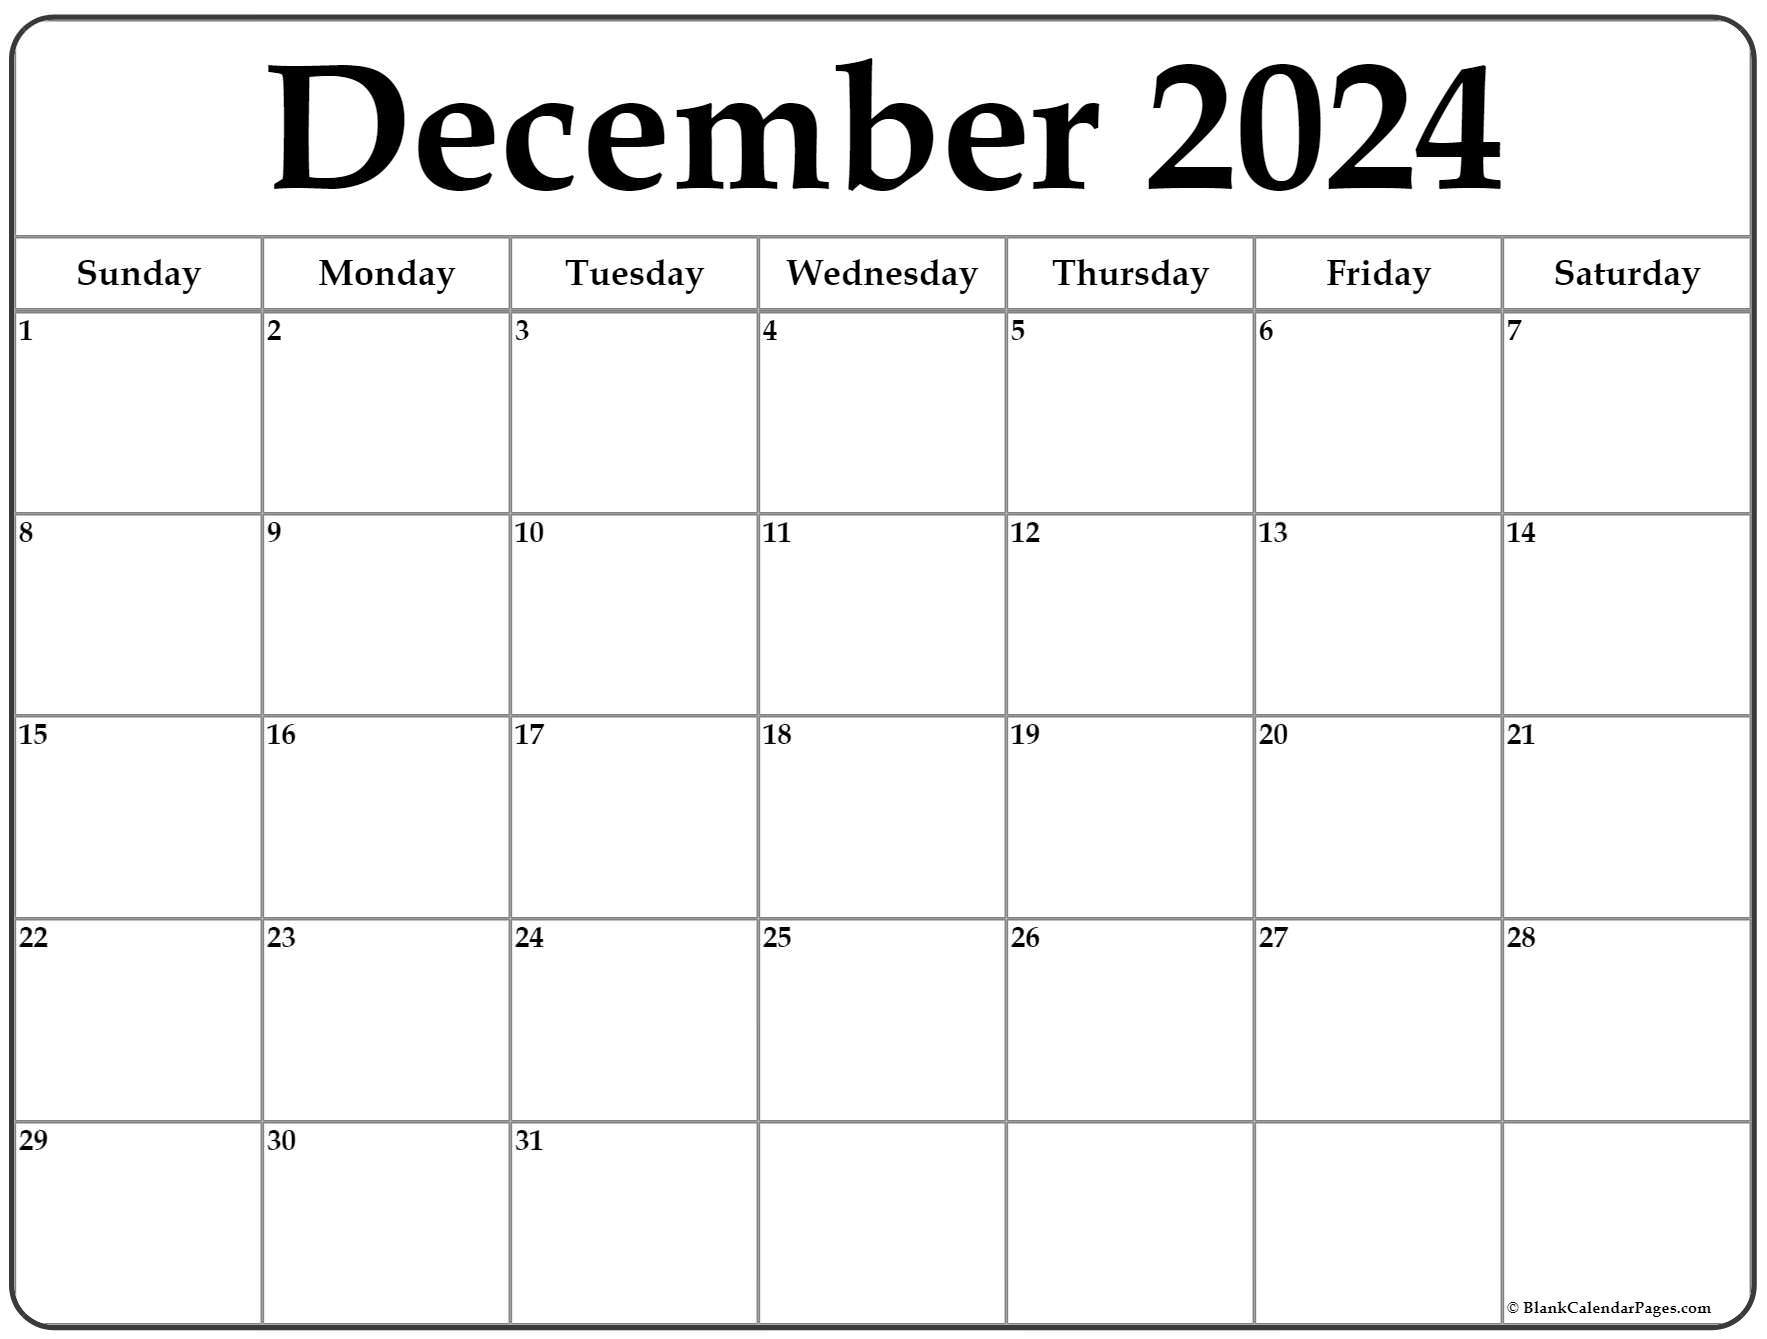 Dec 2024 Calendar Template Free Chere Deeanne